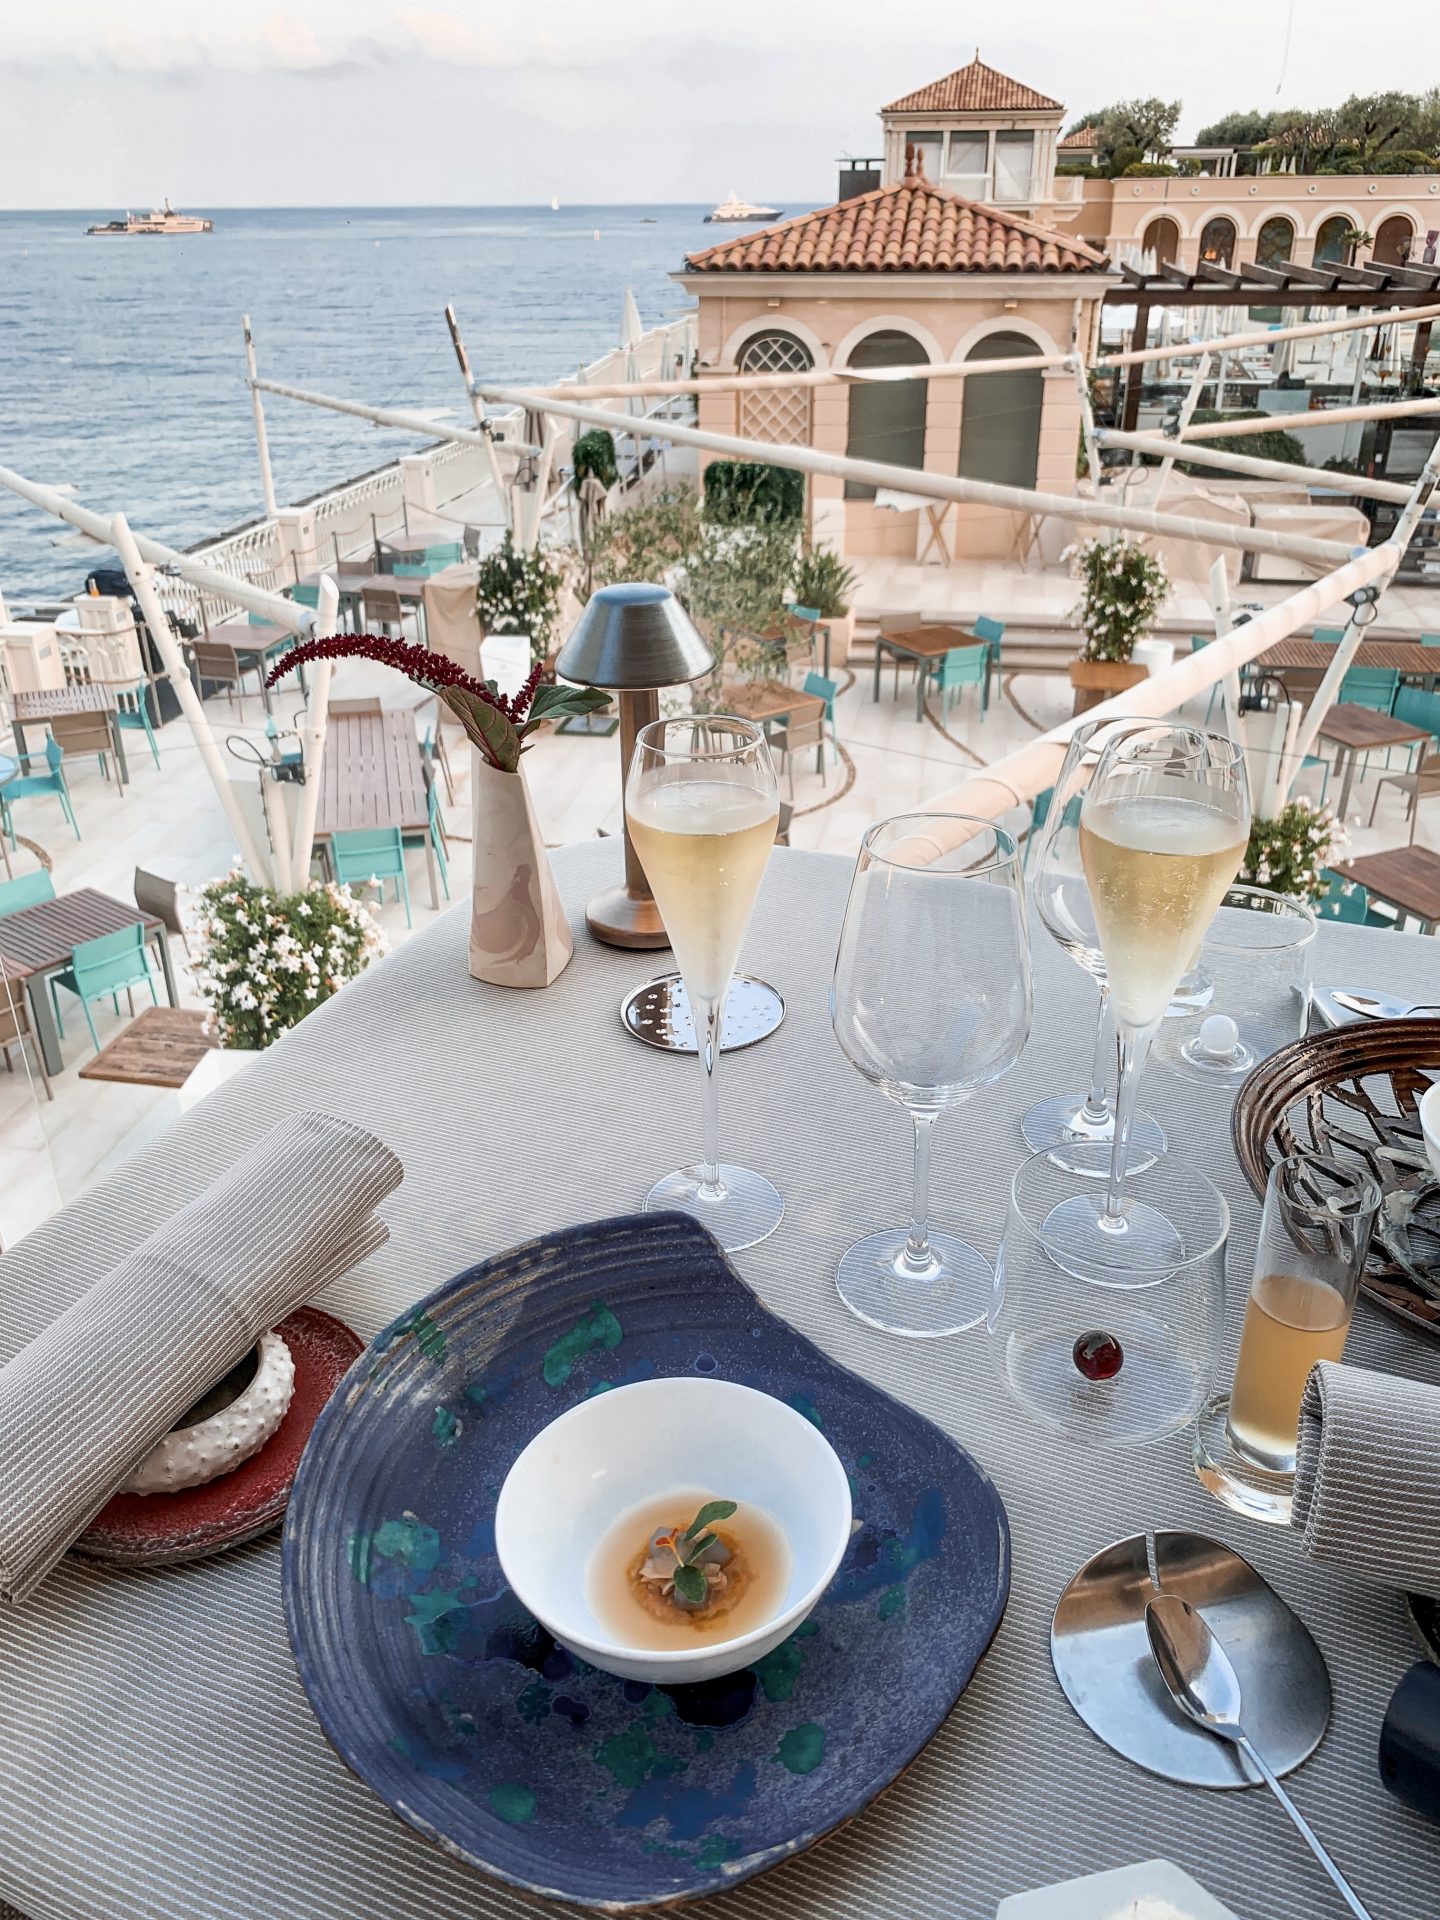 Monte-Carlo Bay Hotel & Resort, Blue Bay 2 Michelin Stars restaurant, Monaco